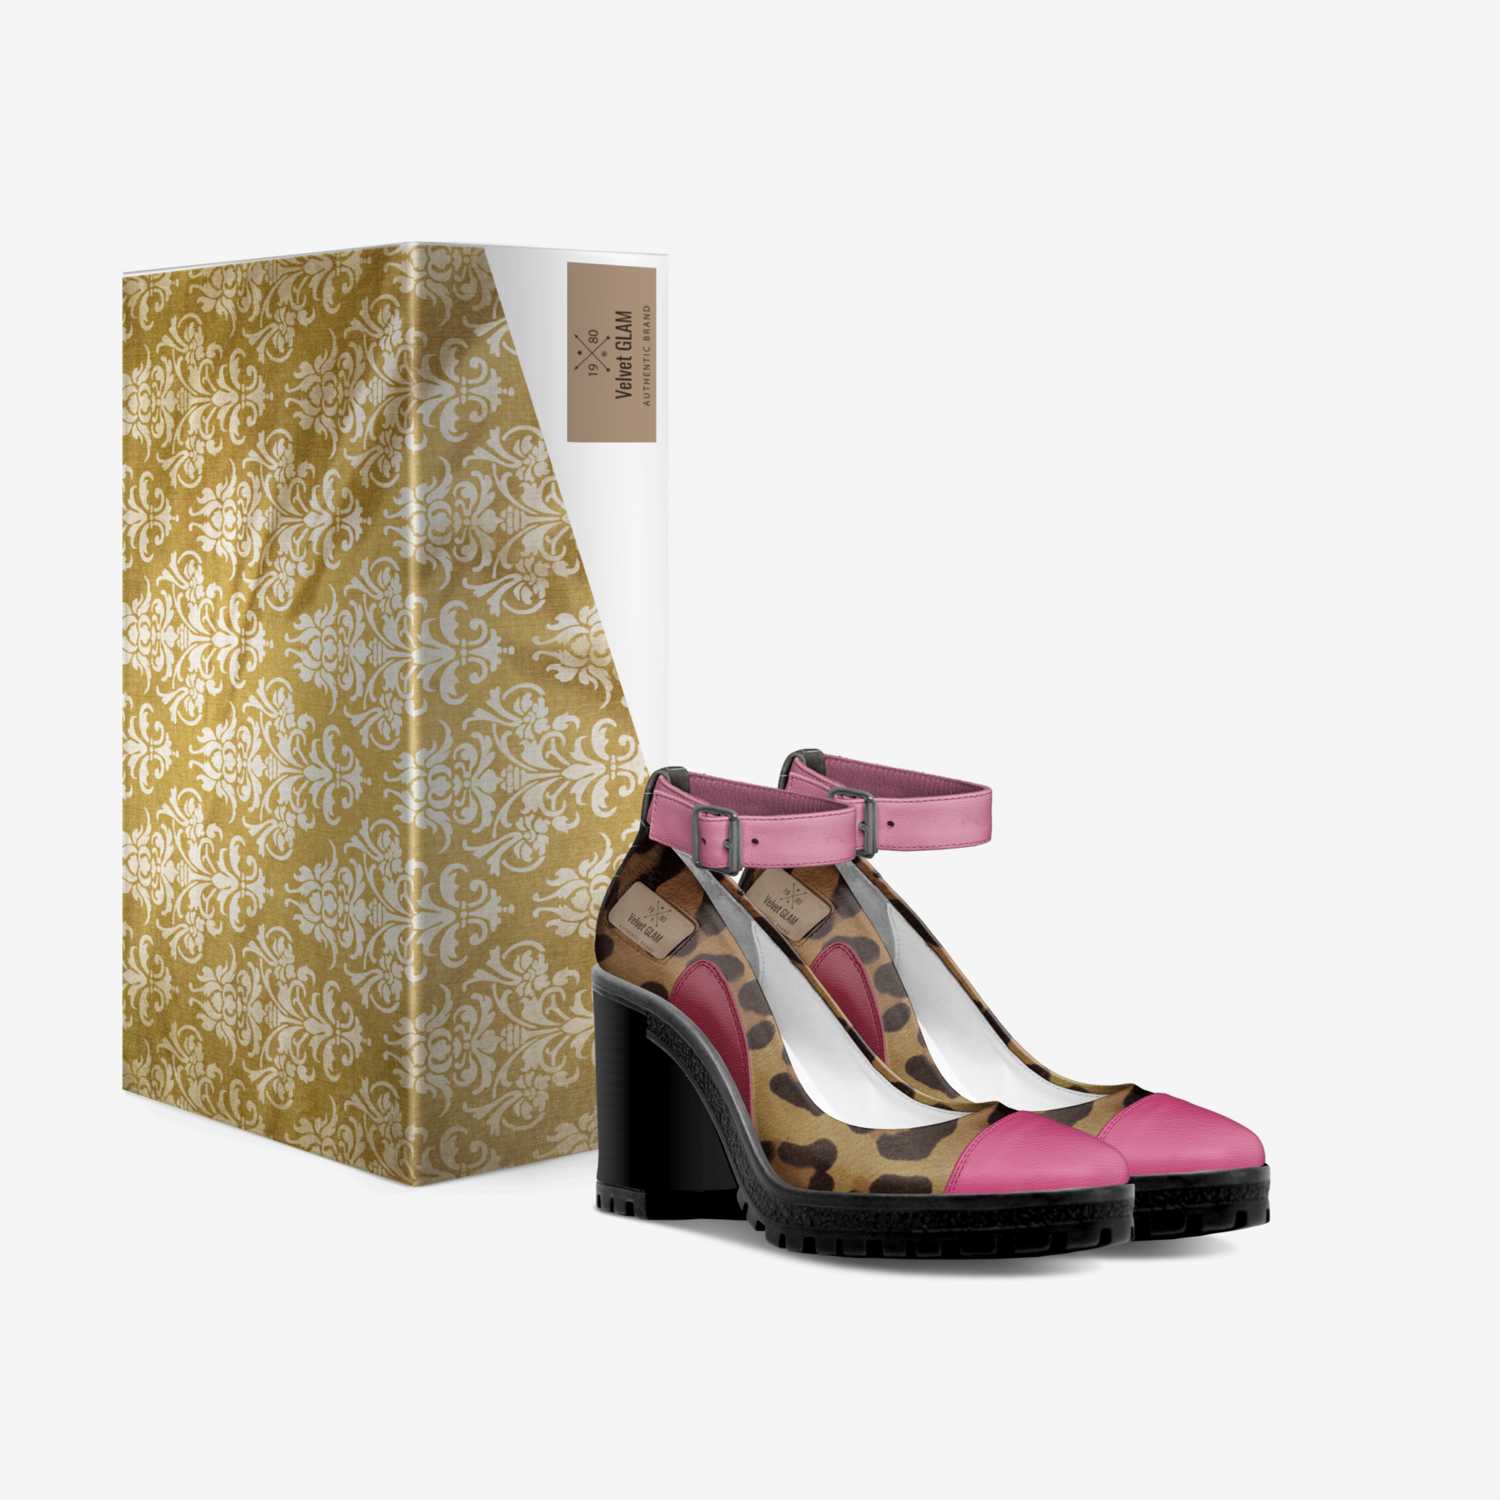 Velvet GLAM custom made in Italy shoes by Shantae Esannason | Box view